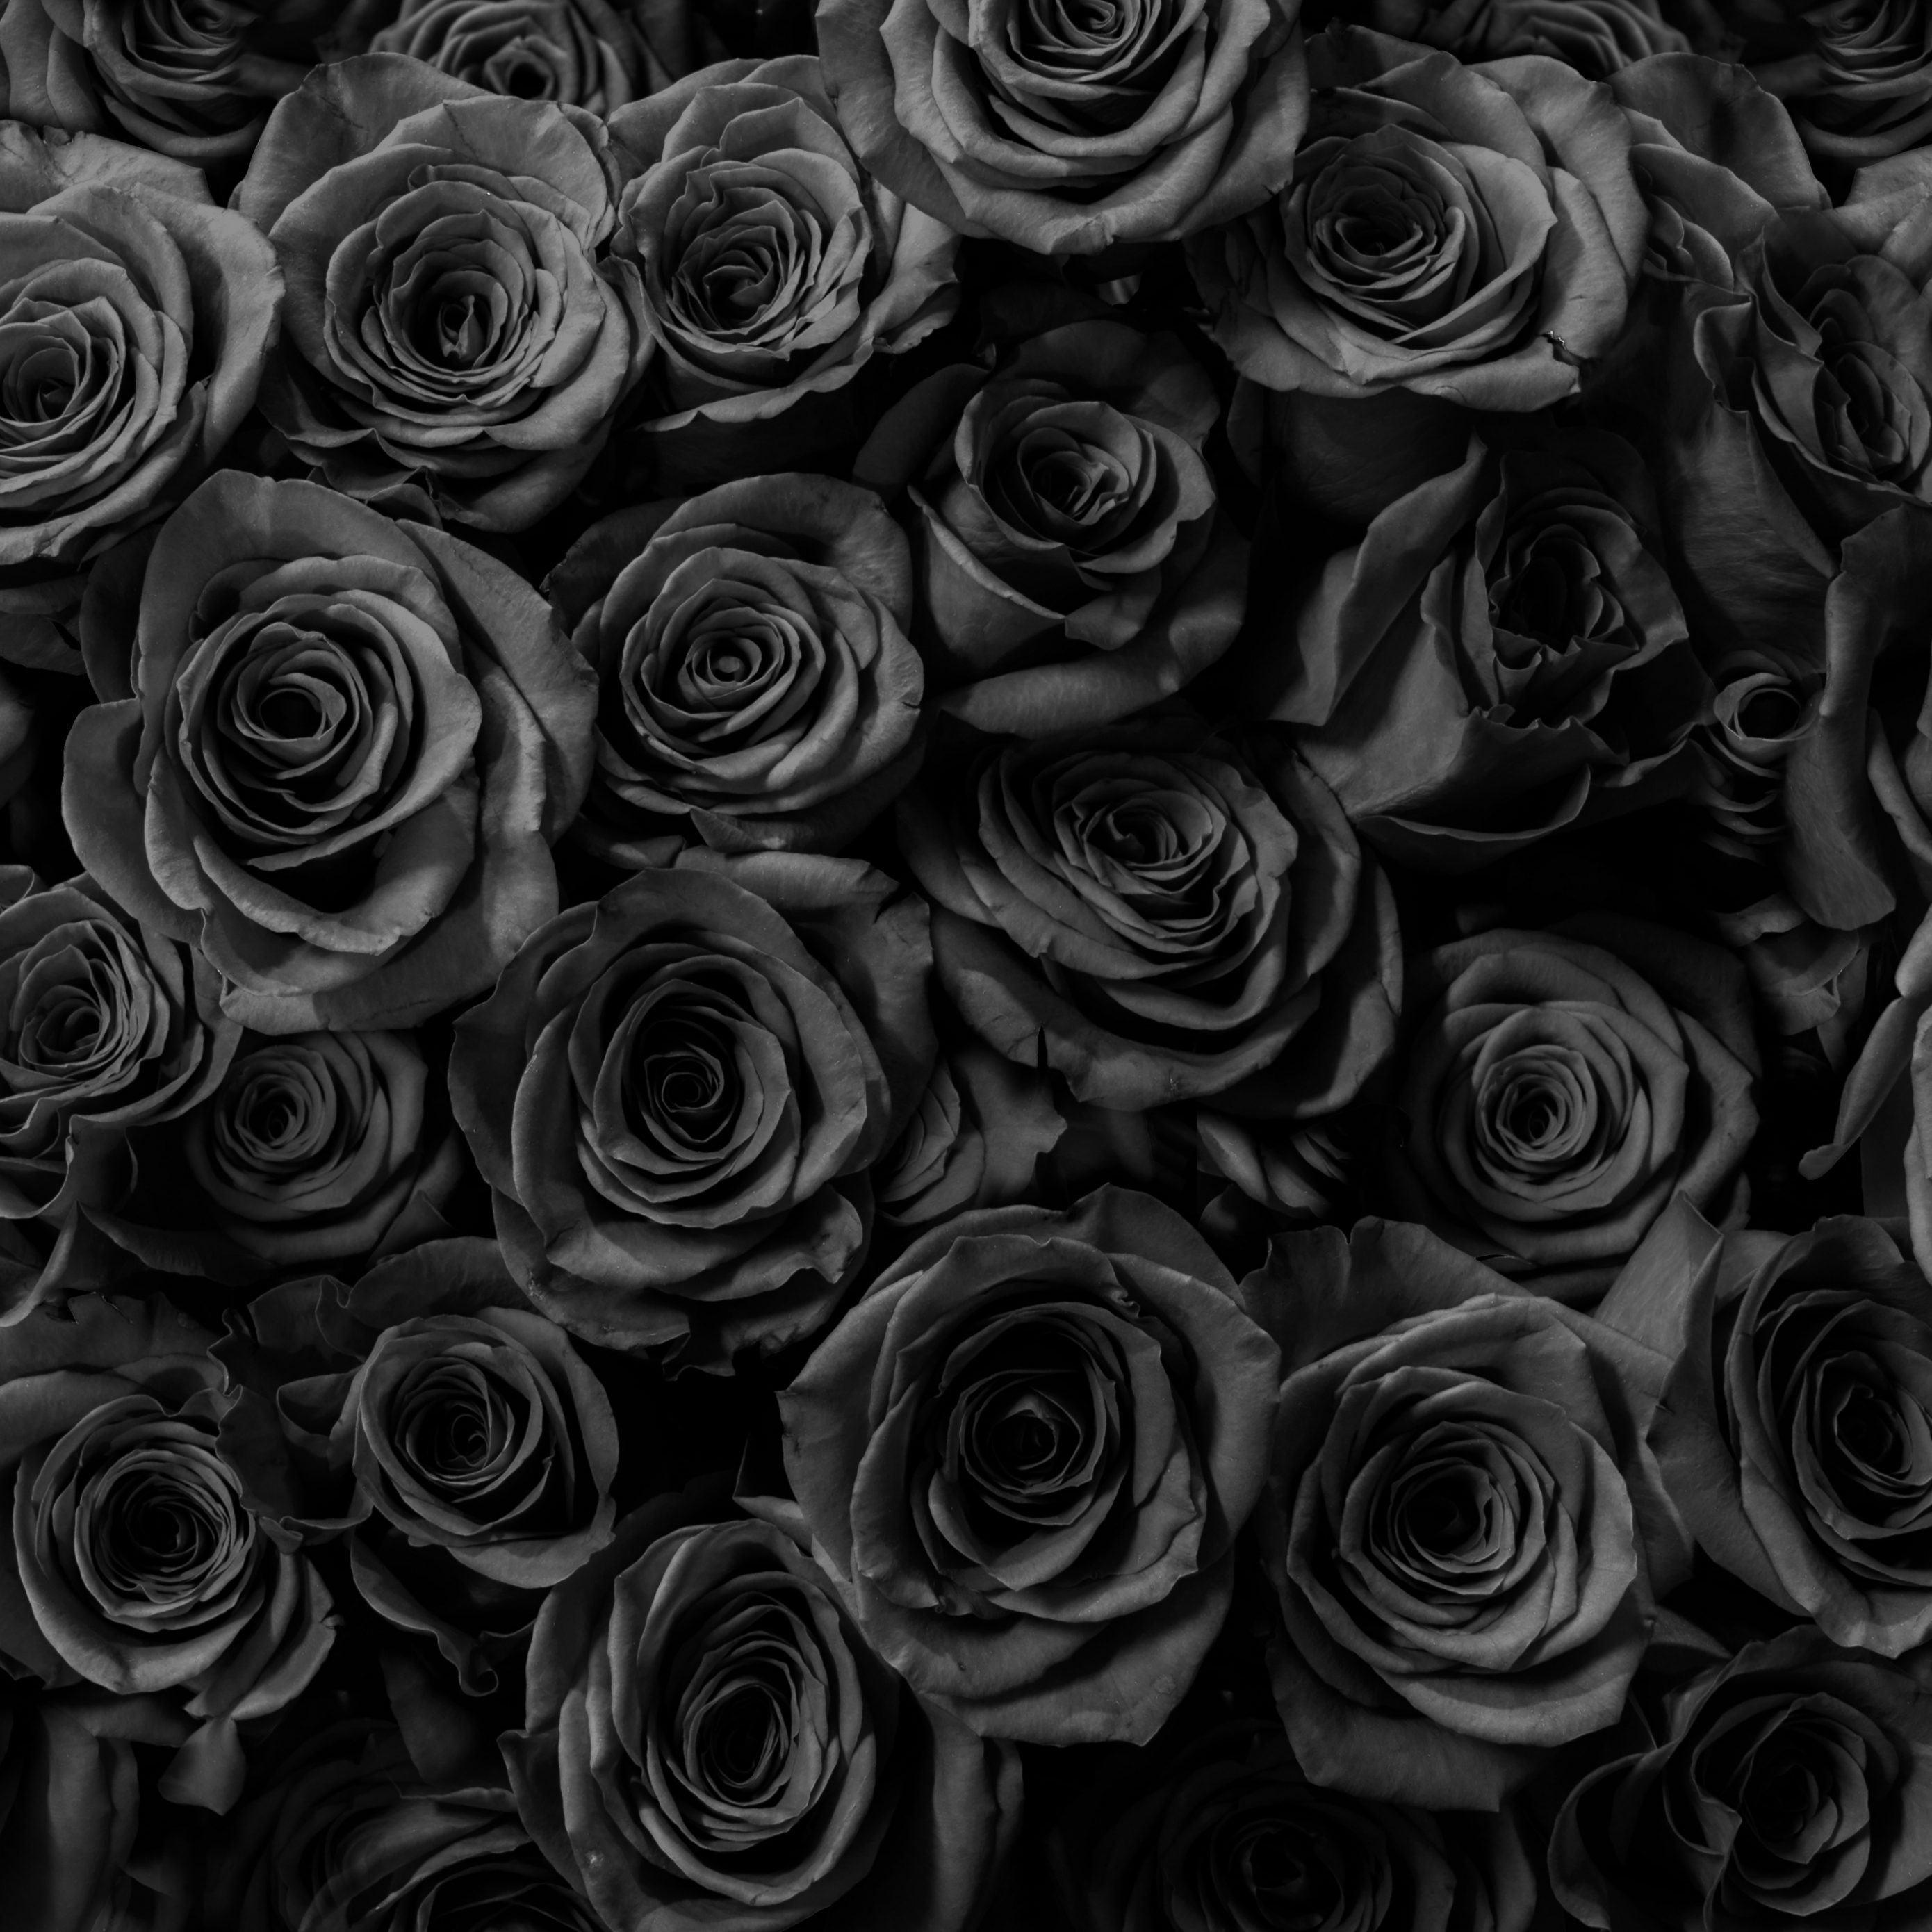 2780x2780 Parallax wallpaper 4k Black Roses Gift Anniversary iPad Wallpaper 2780x2780 pixels resolution